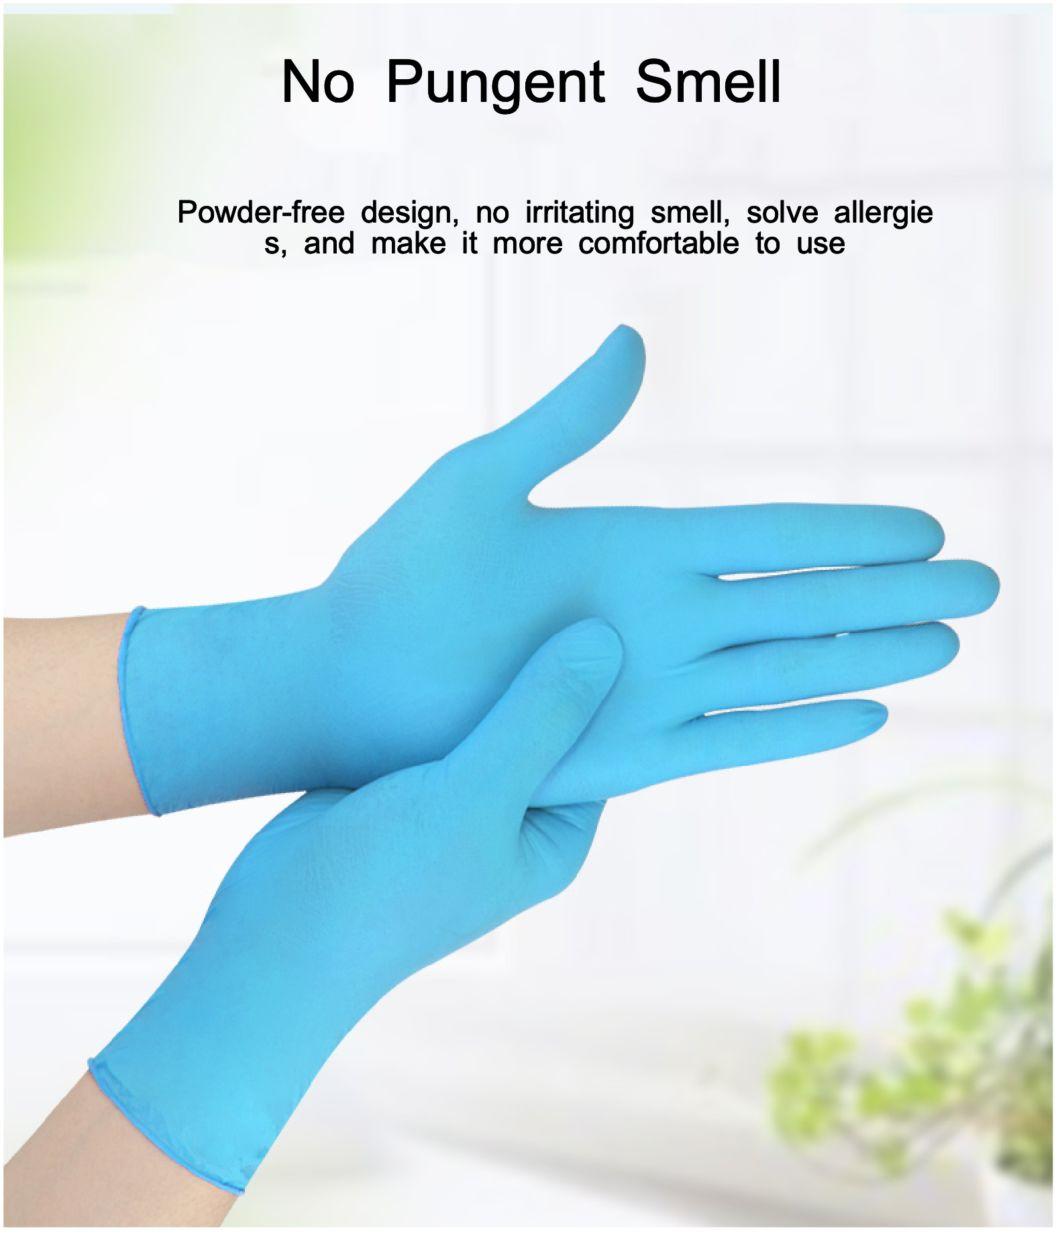 Multicolor Nitrile Gloves Powder Free 510K En455 Disposable Nitrile Examination Gloves